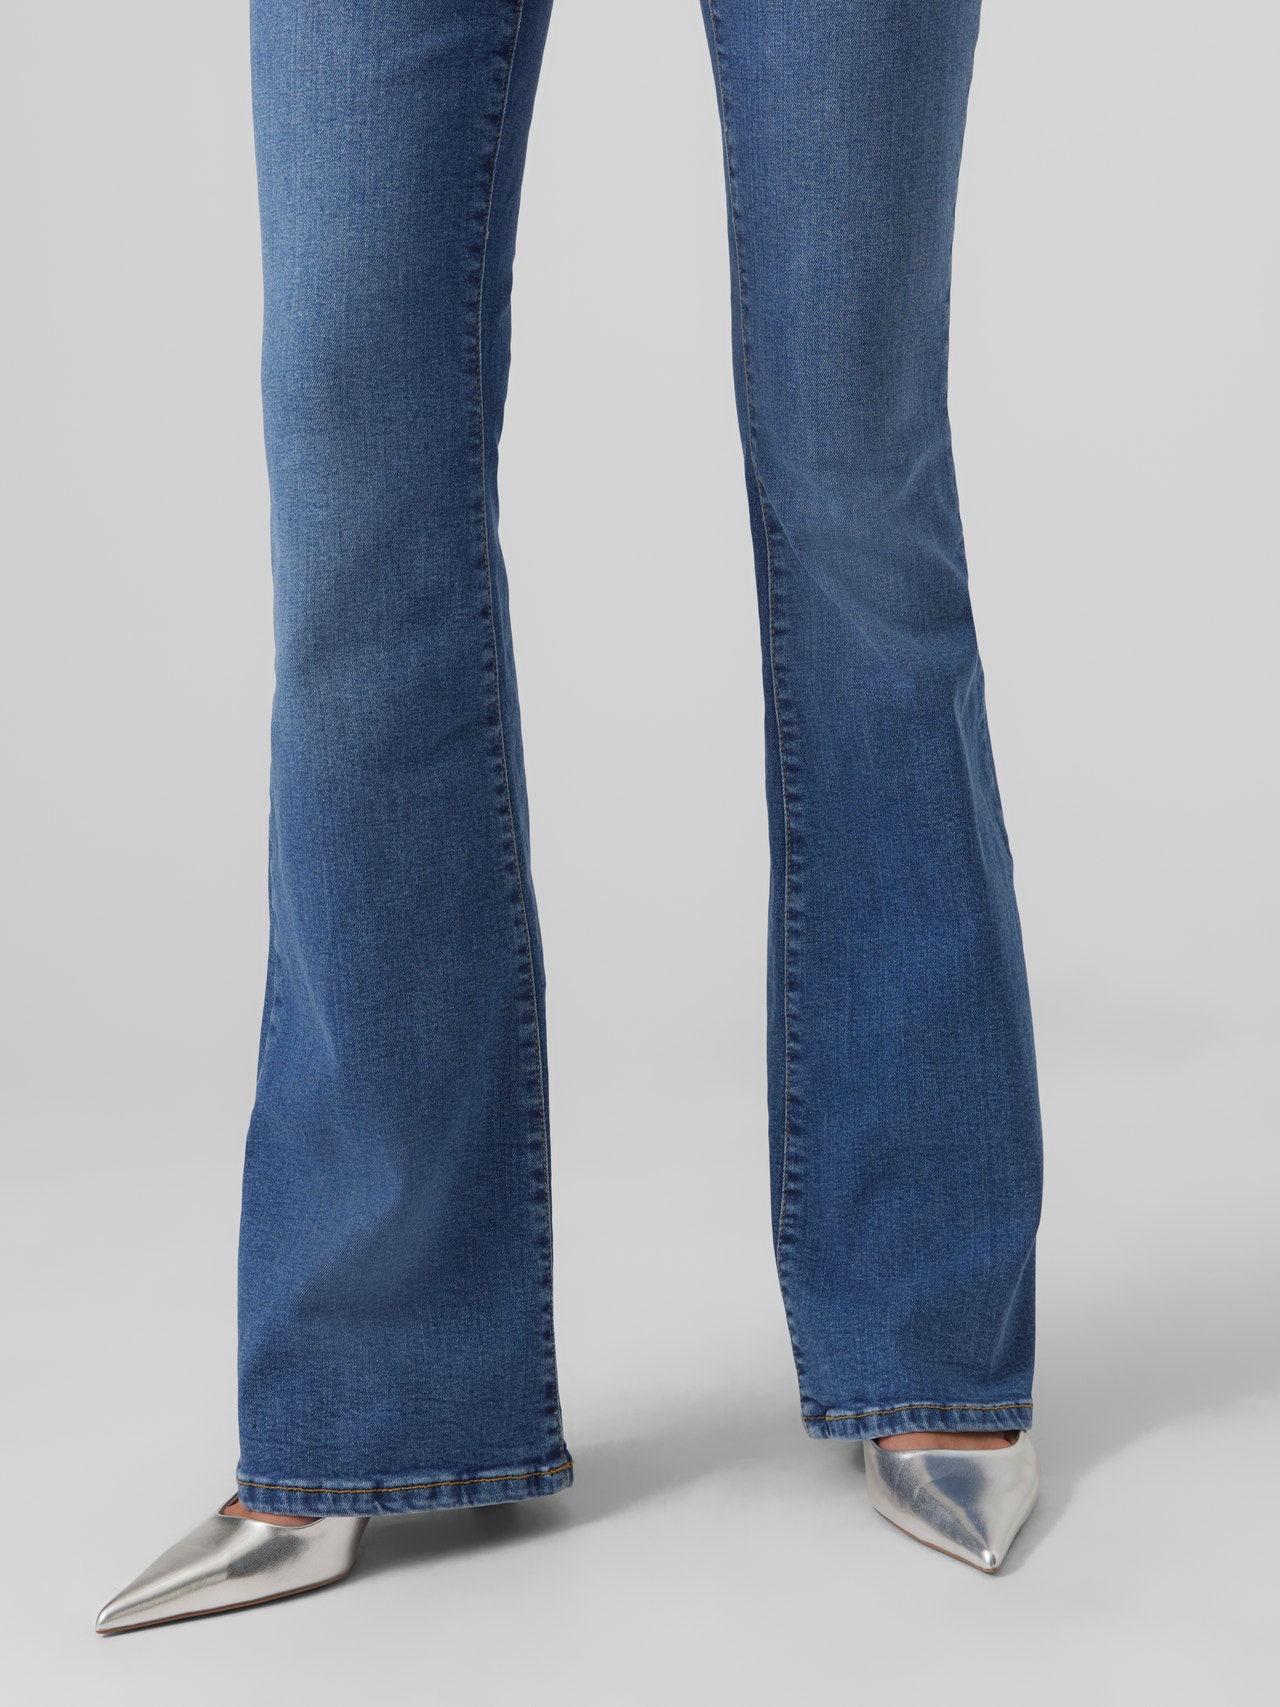 Vero Moda VMSIGI Taille basse Flared Fit Jeans -Medium Blue Denim - 10279227